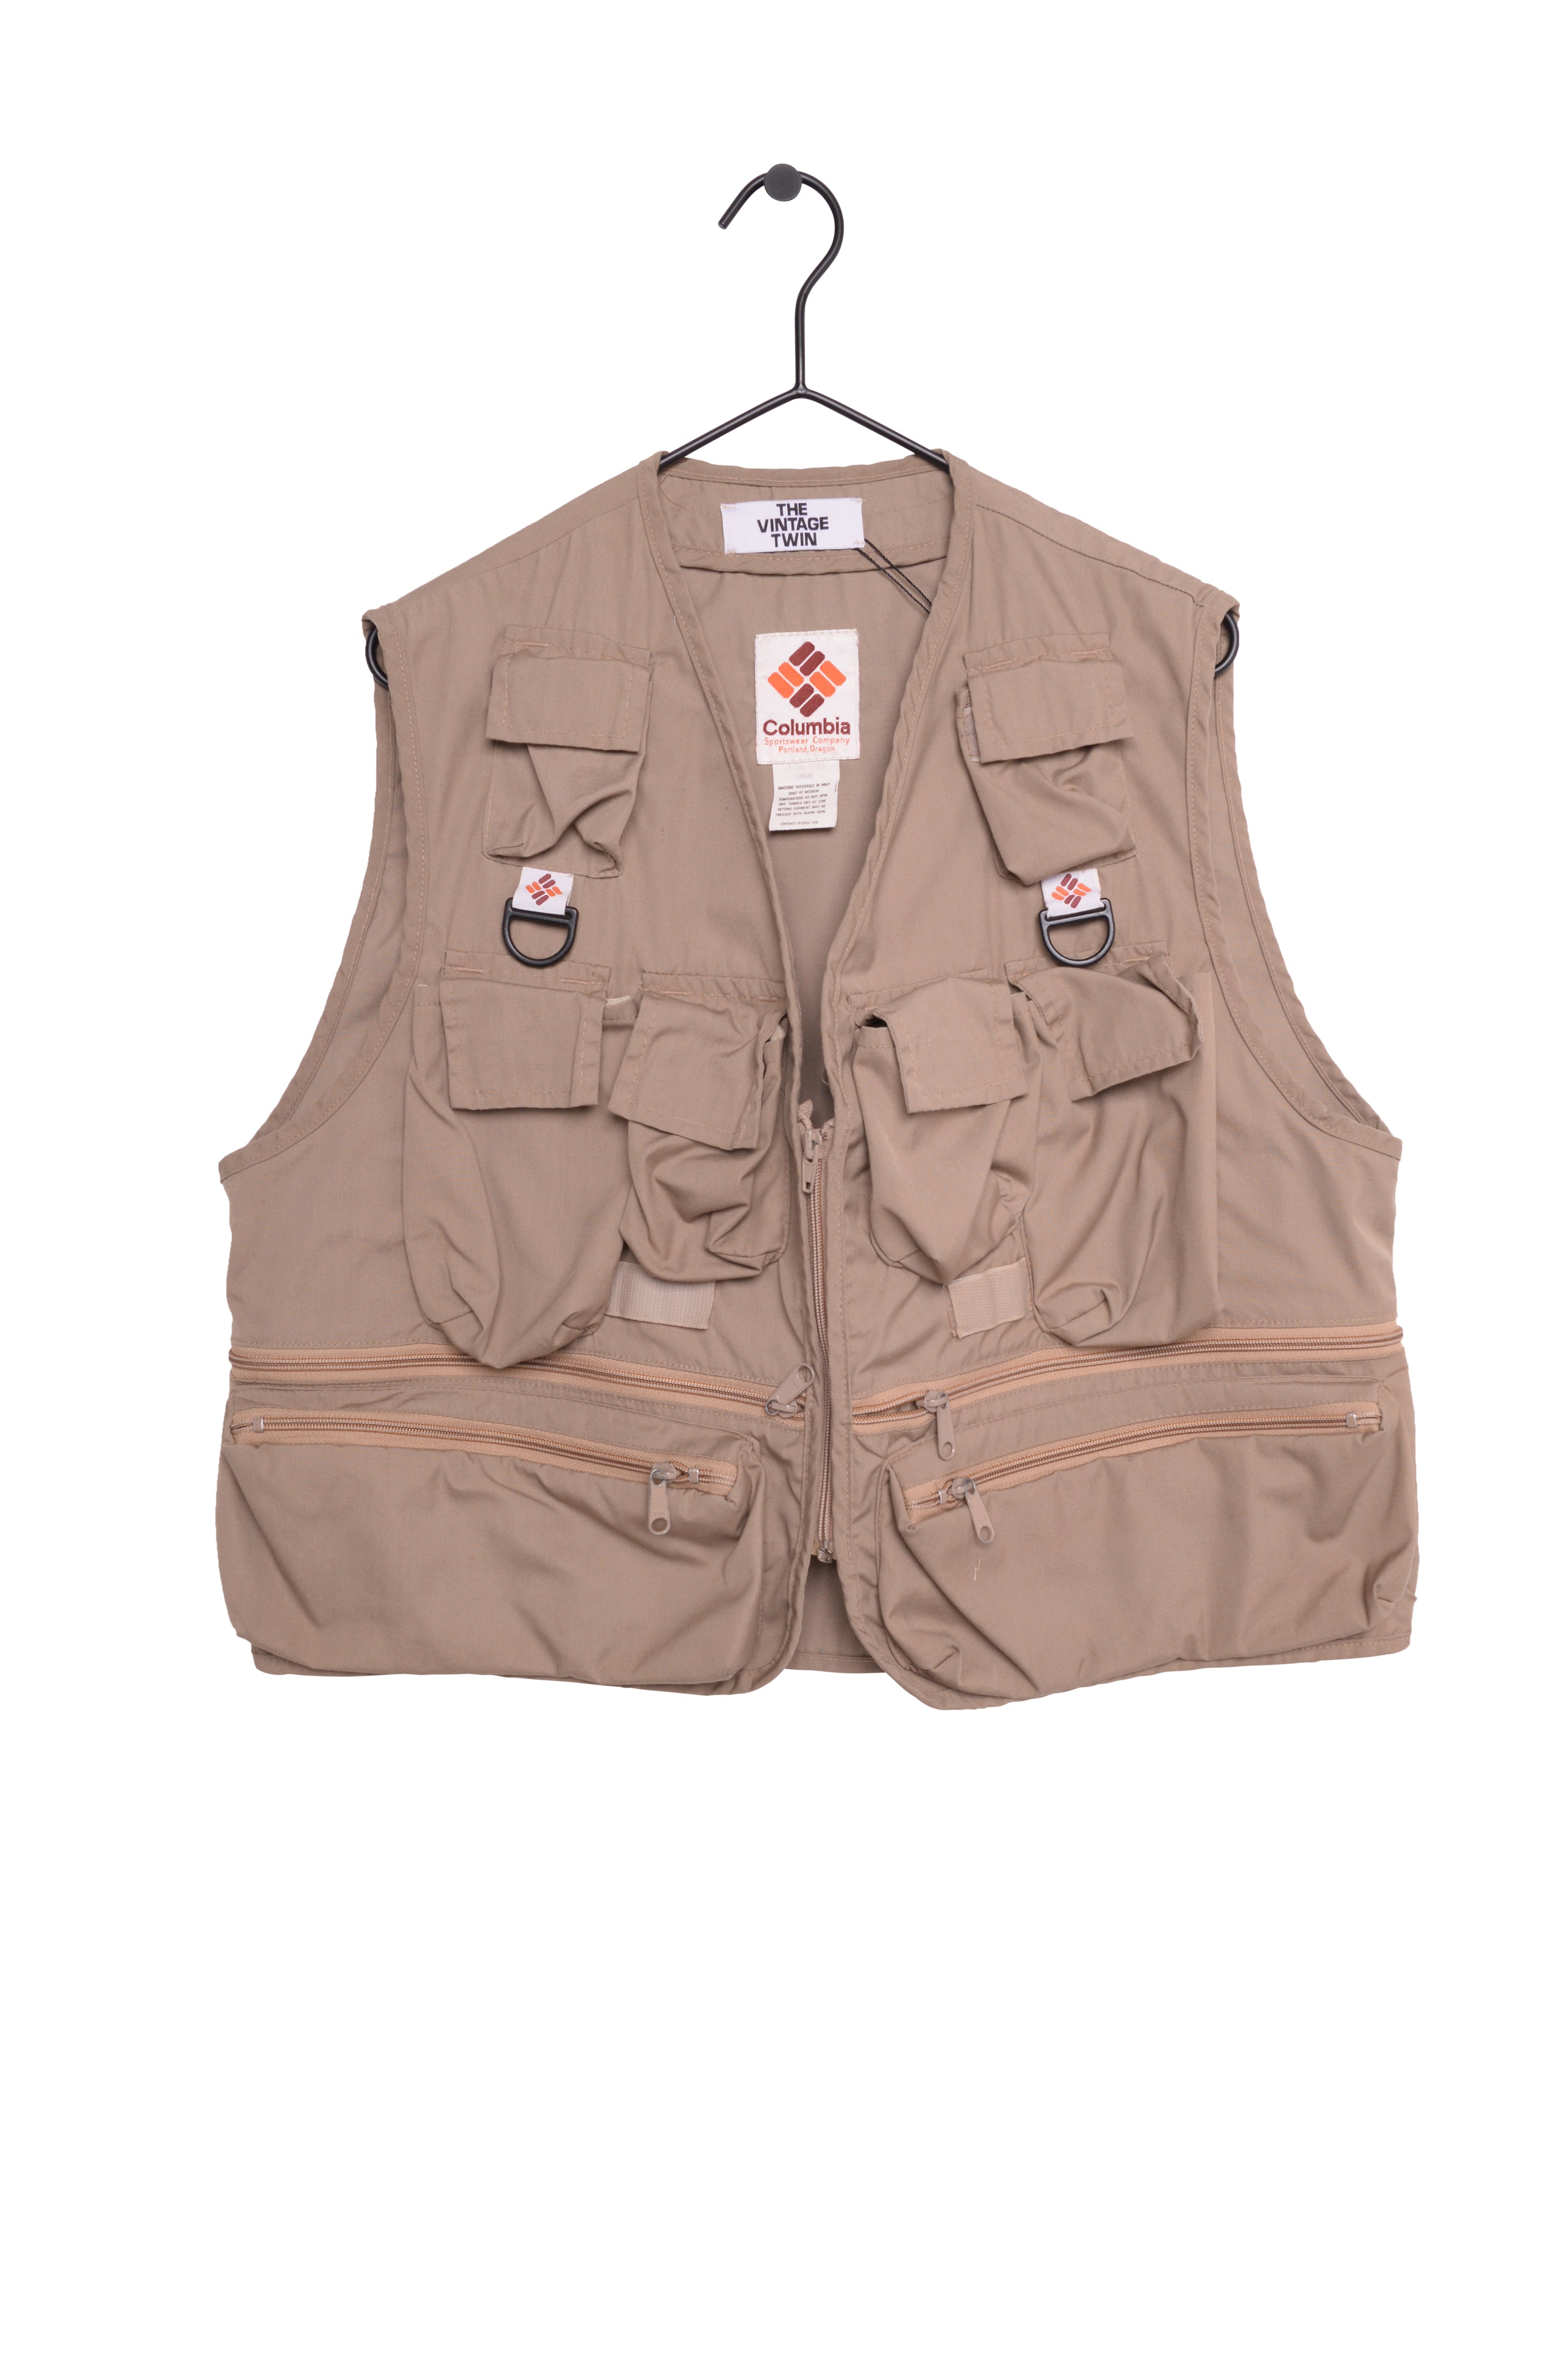 Columbia, Jackets & Coats, Vintage Columbia Fishing Vest